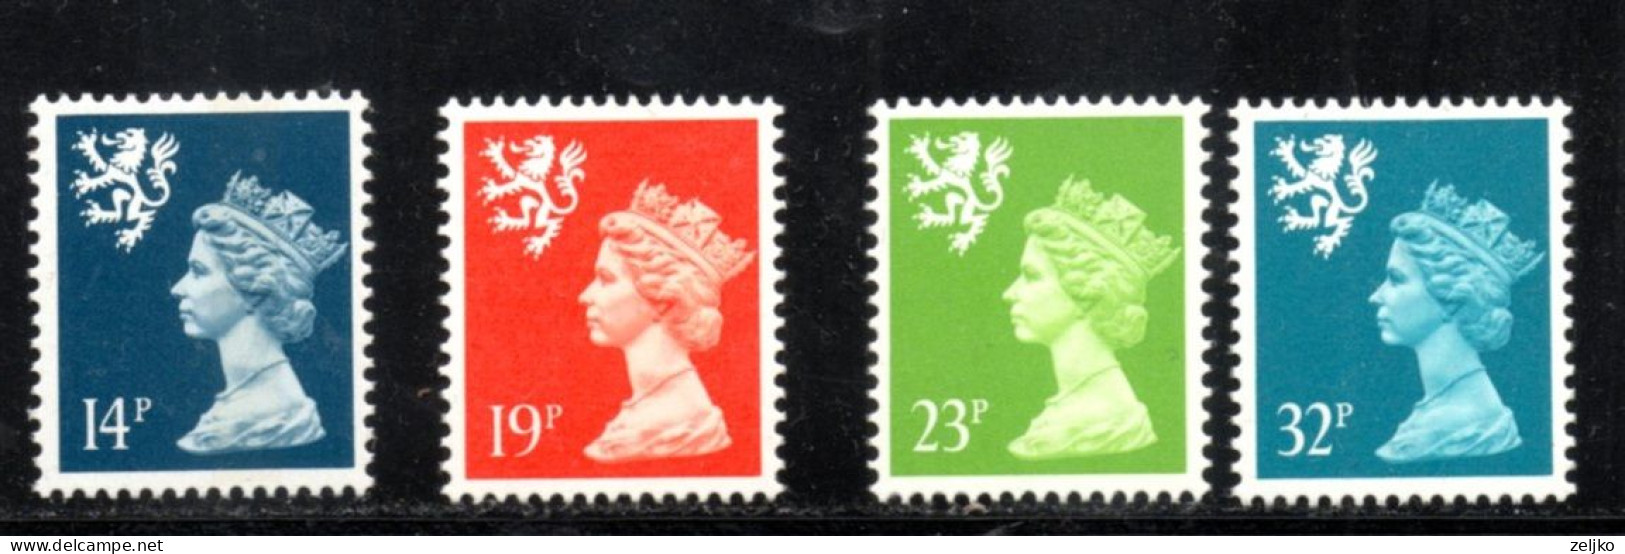 UK, GB, Great Britain, Regional Issue, Scotland, MNH, 1988, Michel 49 - 52, Queen Elizabeth - Ecosse